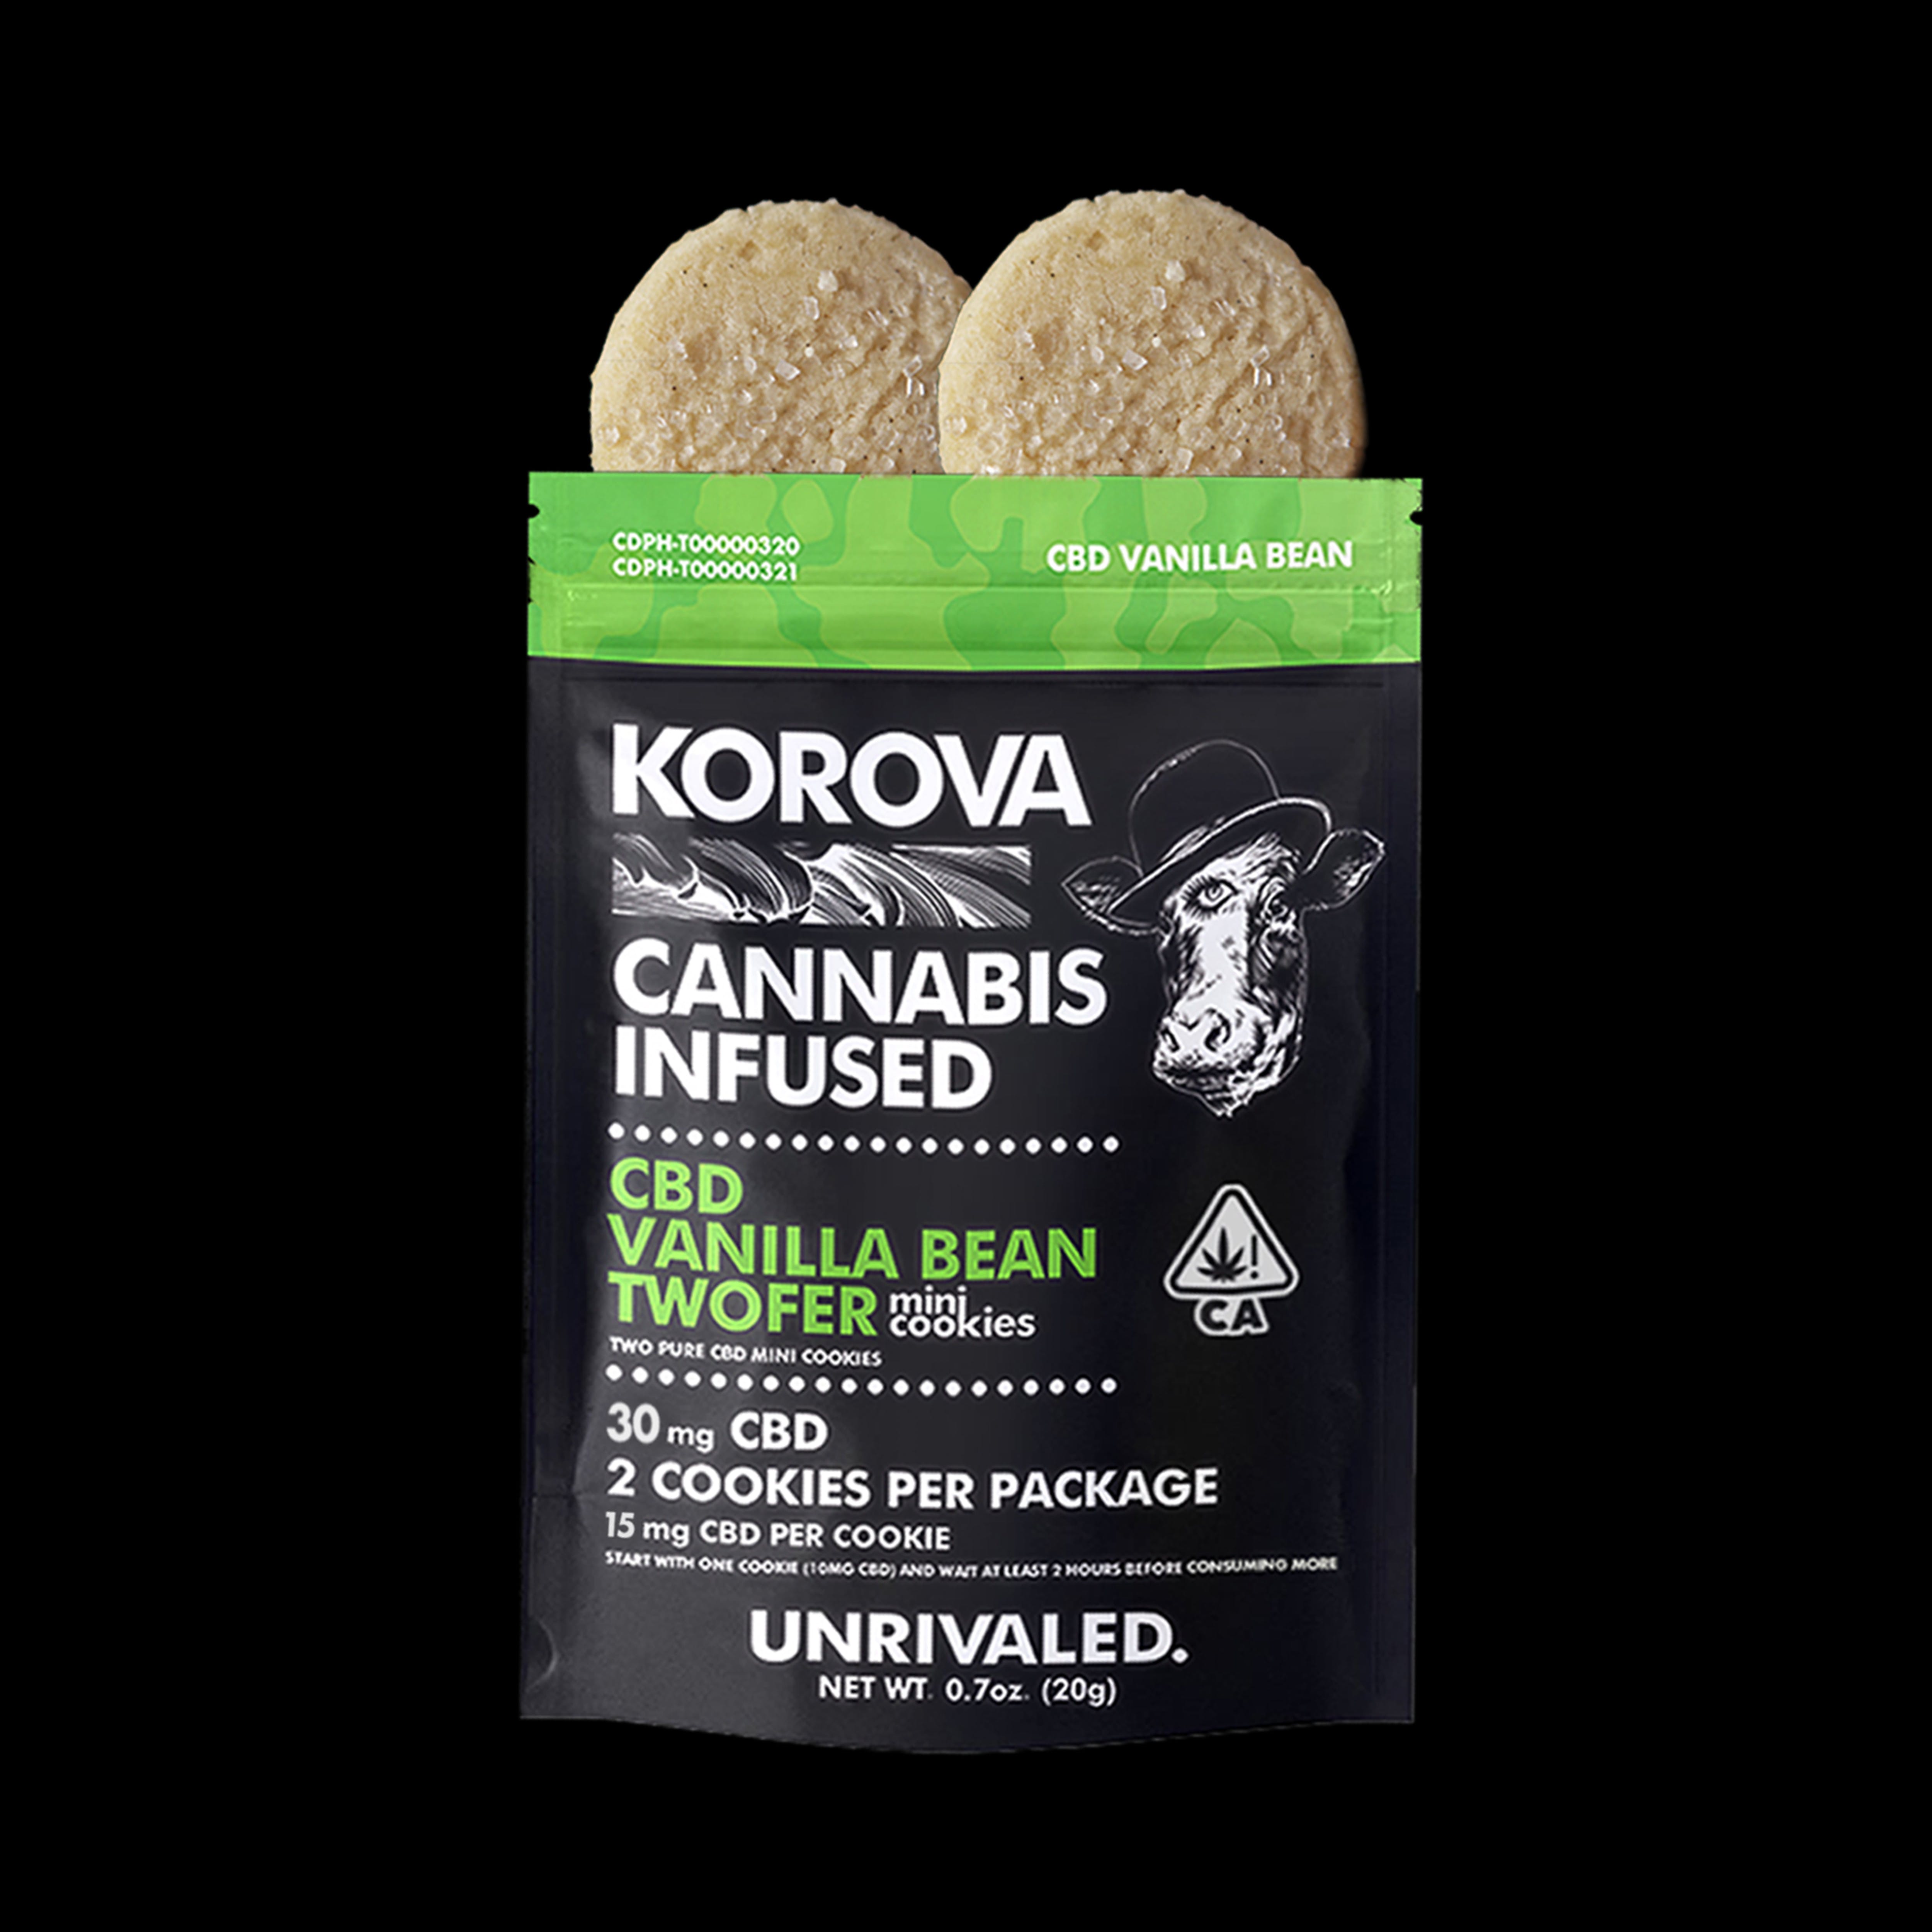 marijuana-dispensaries-hyperion-healing-chatsworth-in-chatsworth-twofer-cbd-vanilla-bean-minis-30mg-cbd